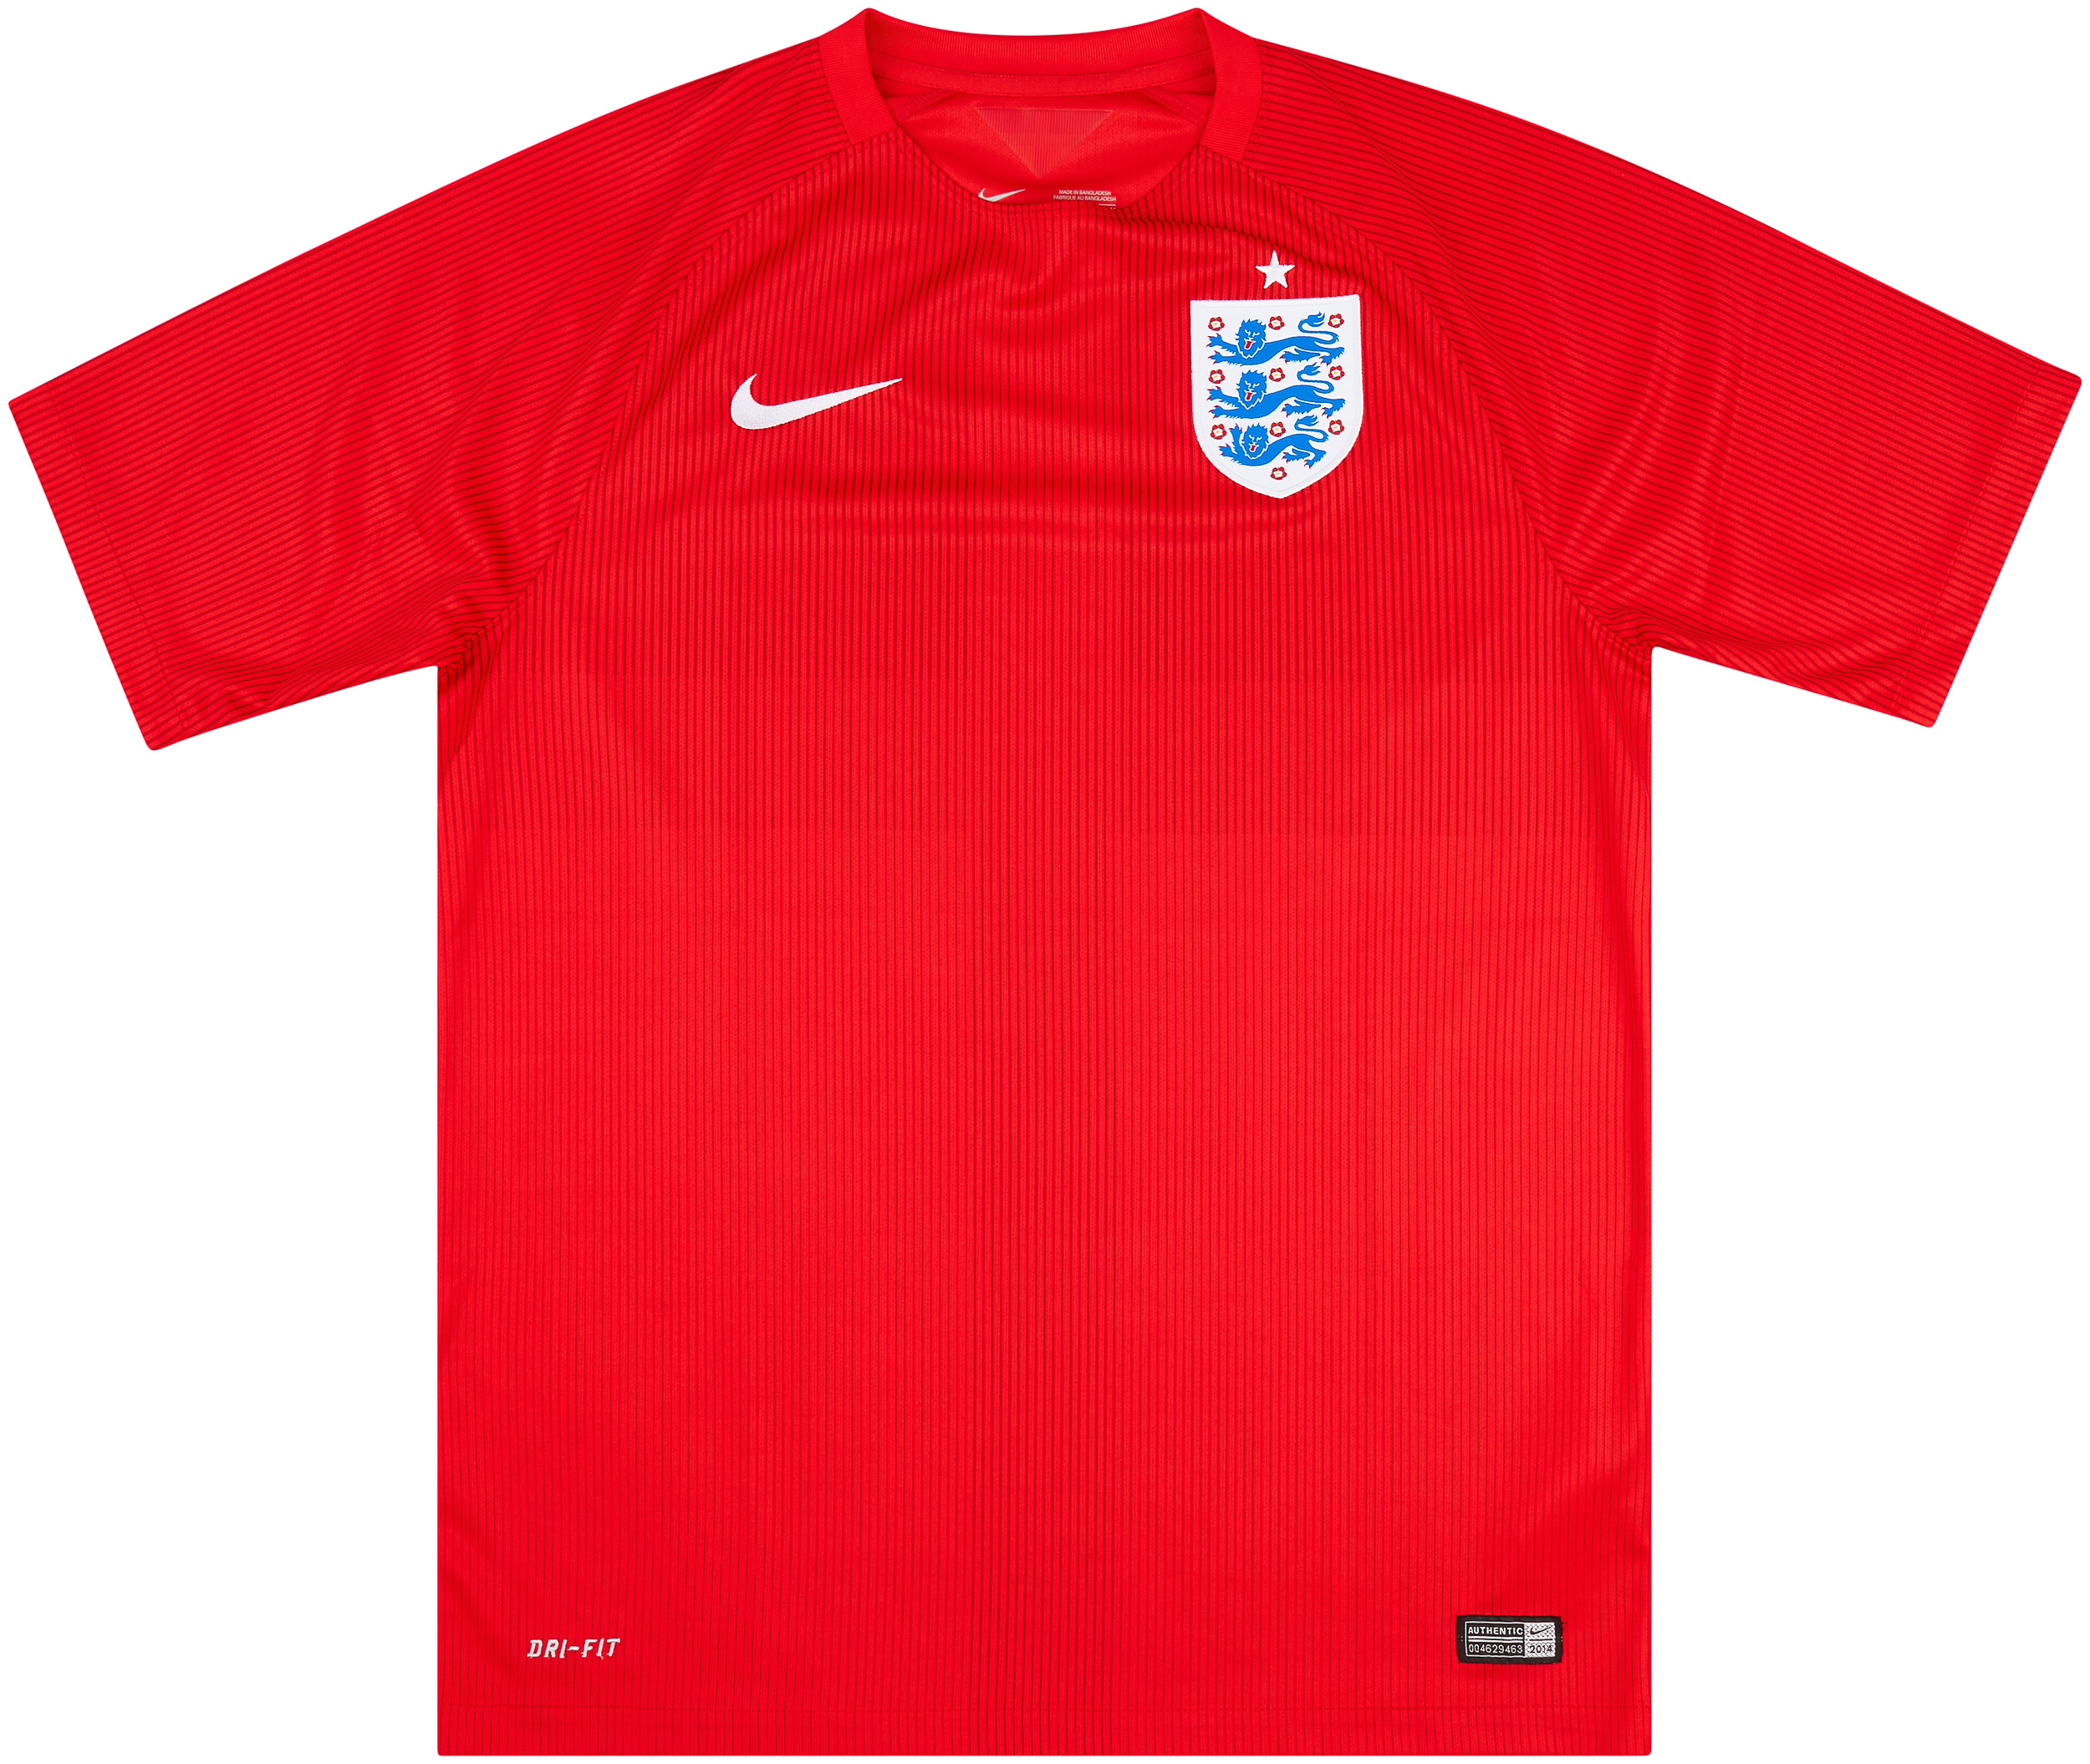 England Away football shirt 2010 - 2012.